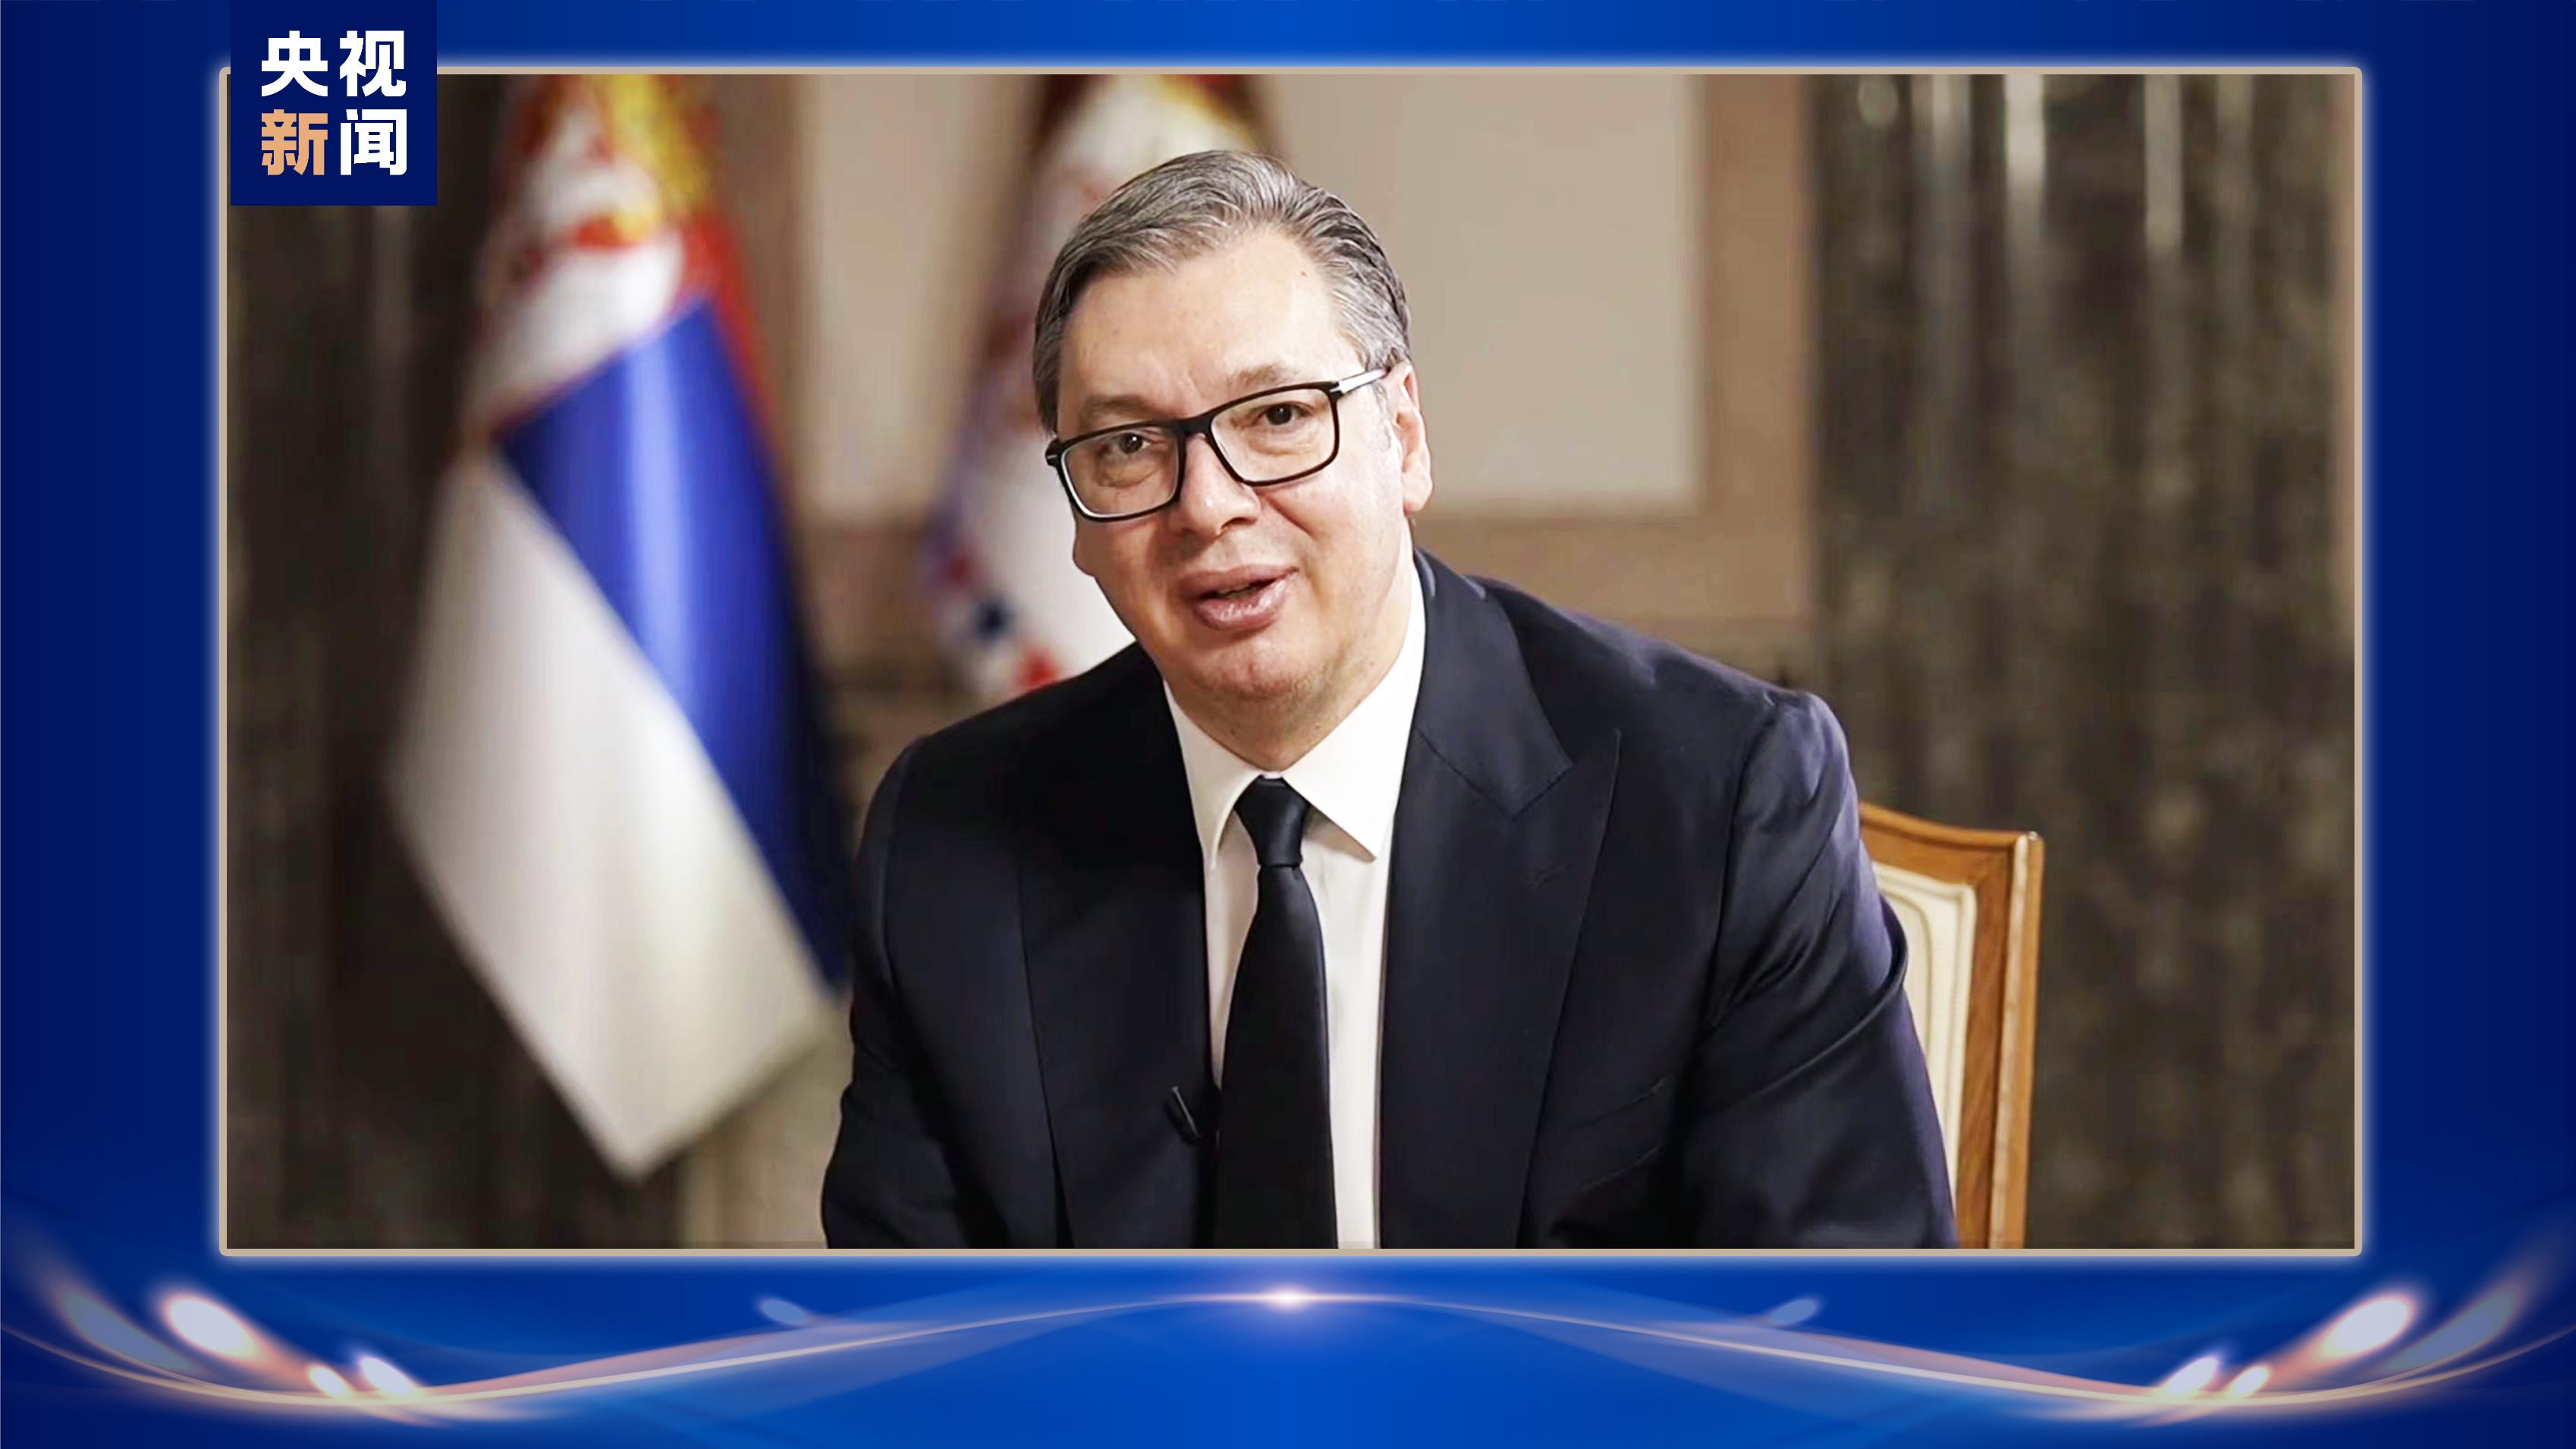 Serbian President Aleksandar Vucic delivers a video address for the 